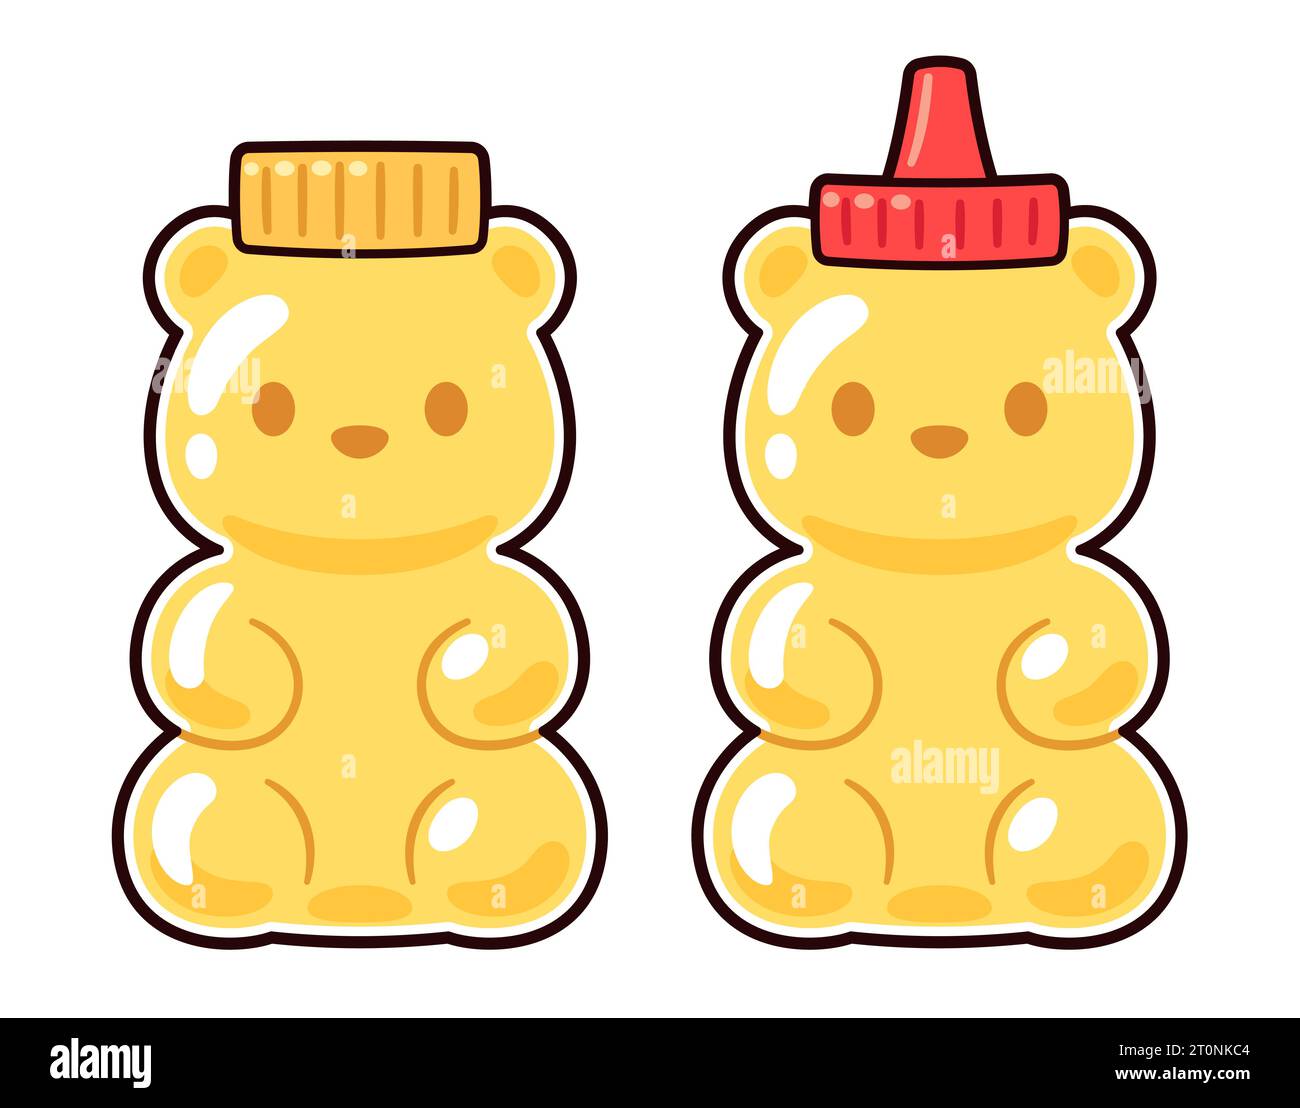 Two cute cartoon bear shaped honey bottles drawing. Animal packaging design. Vector clip art Illustration. Stock Vector